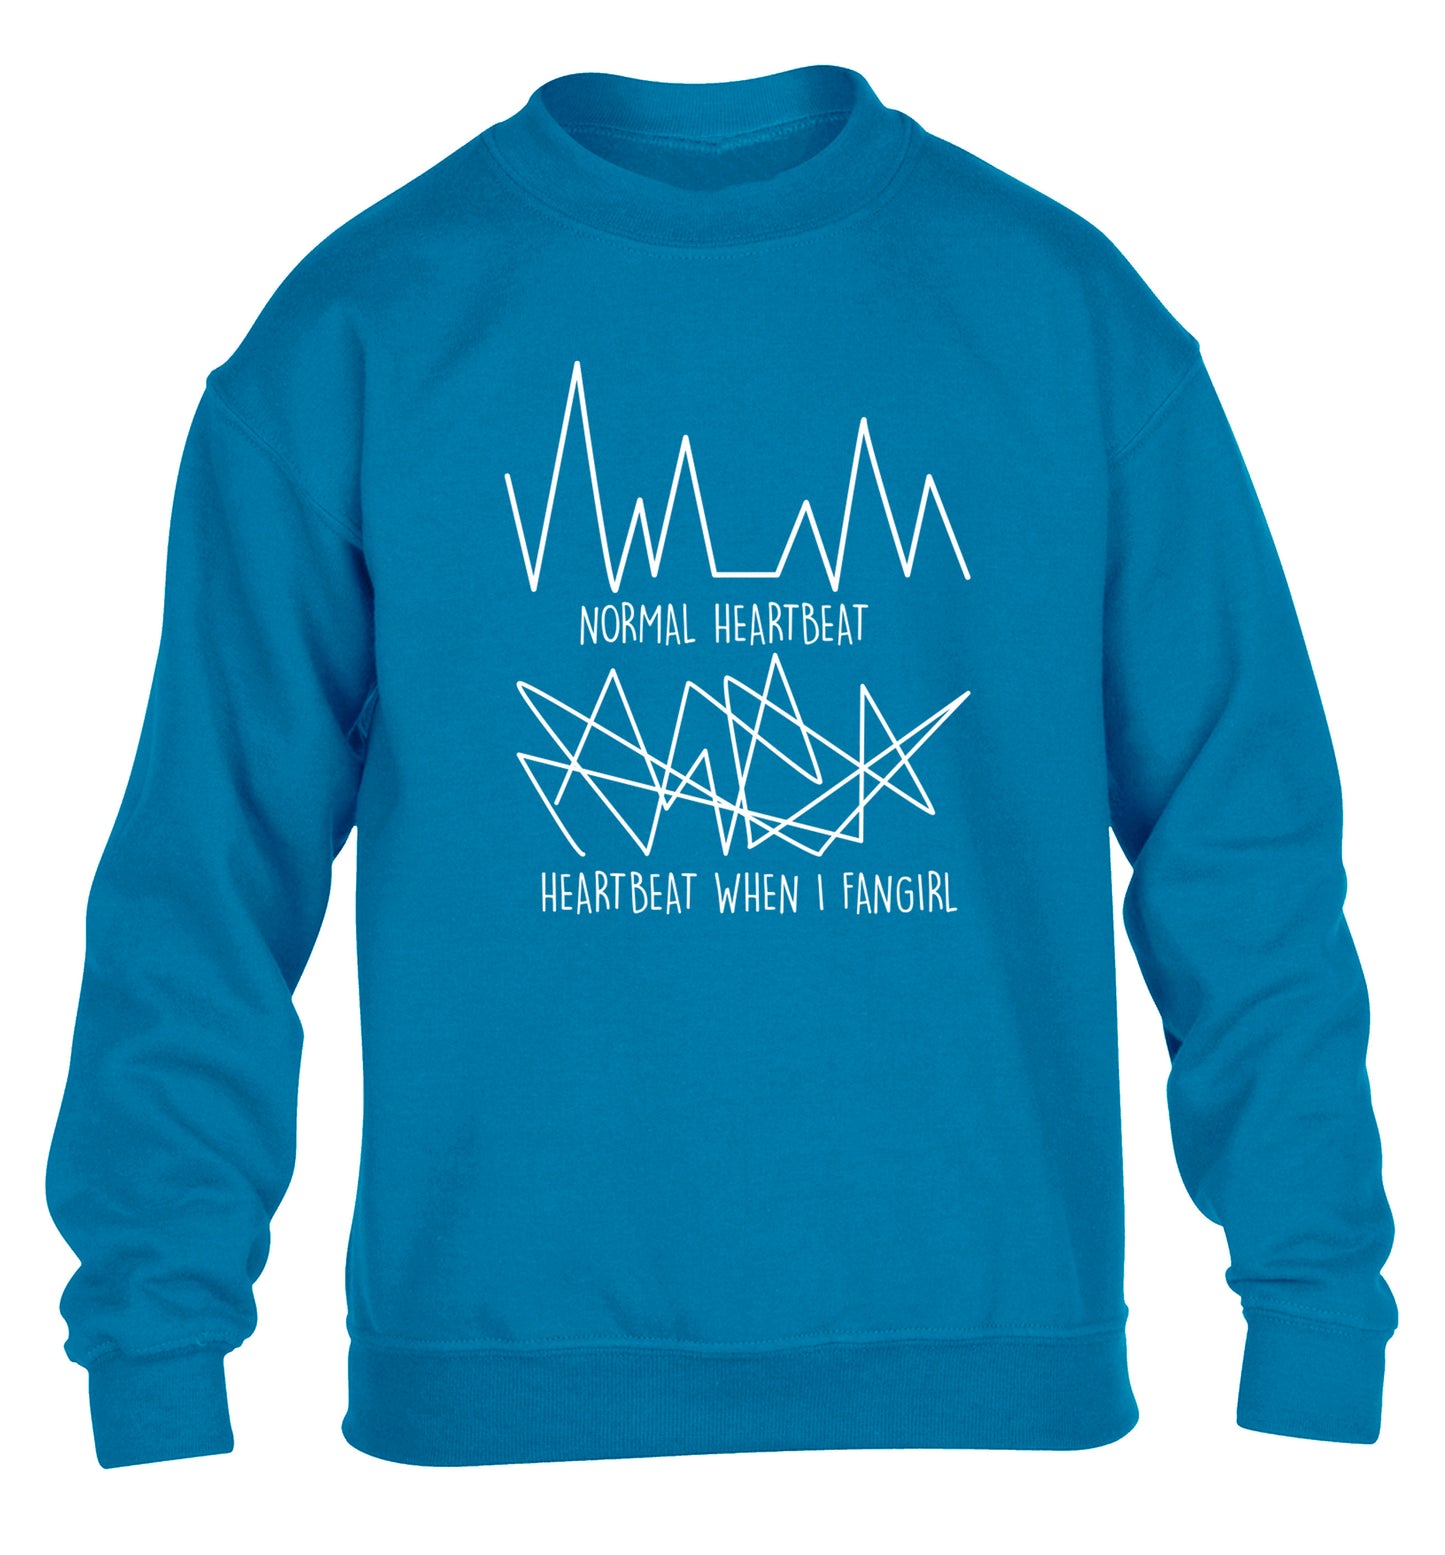 Normal heartbeat heartbeat when I fangirl children's blue sweater 12-14 Years